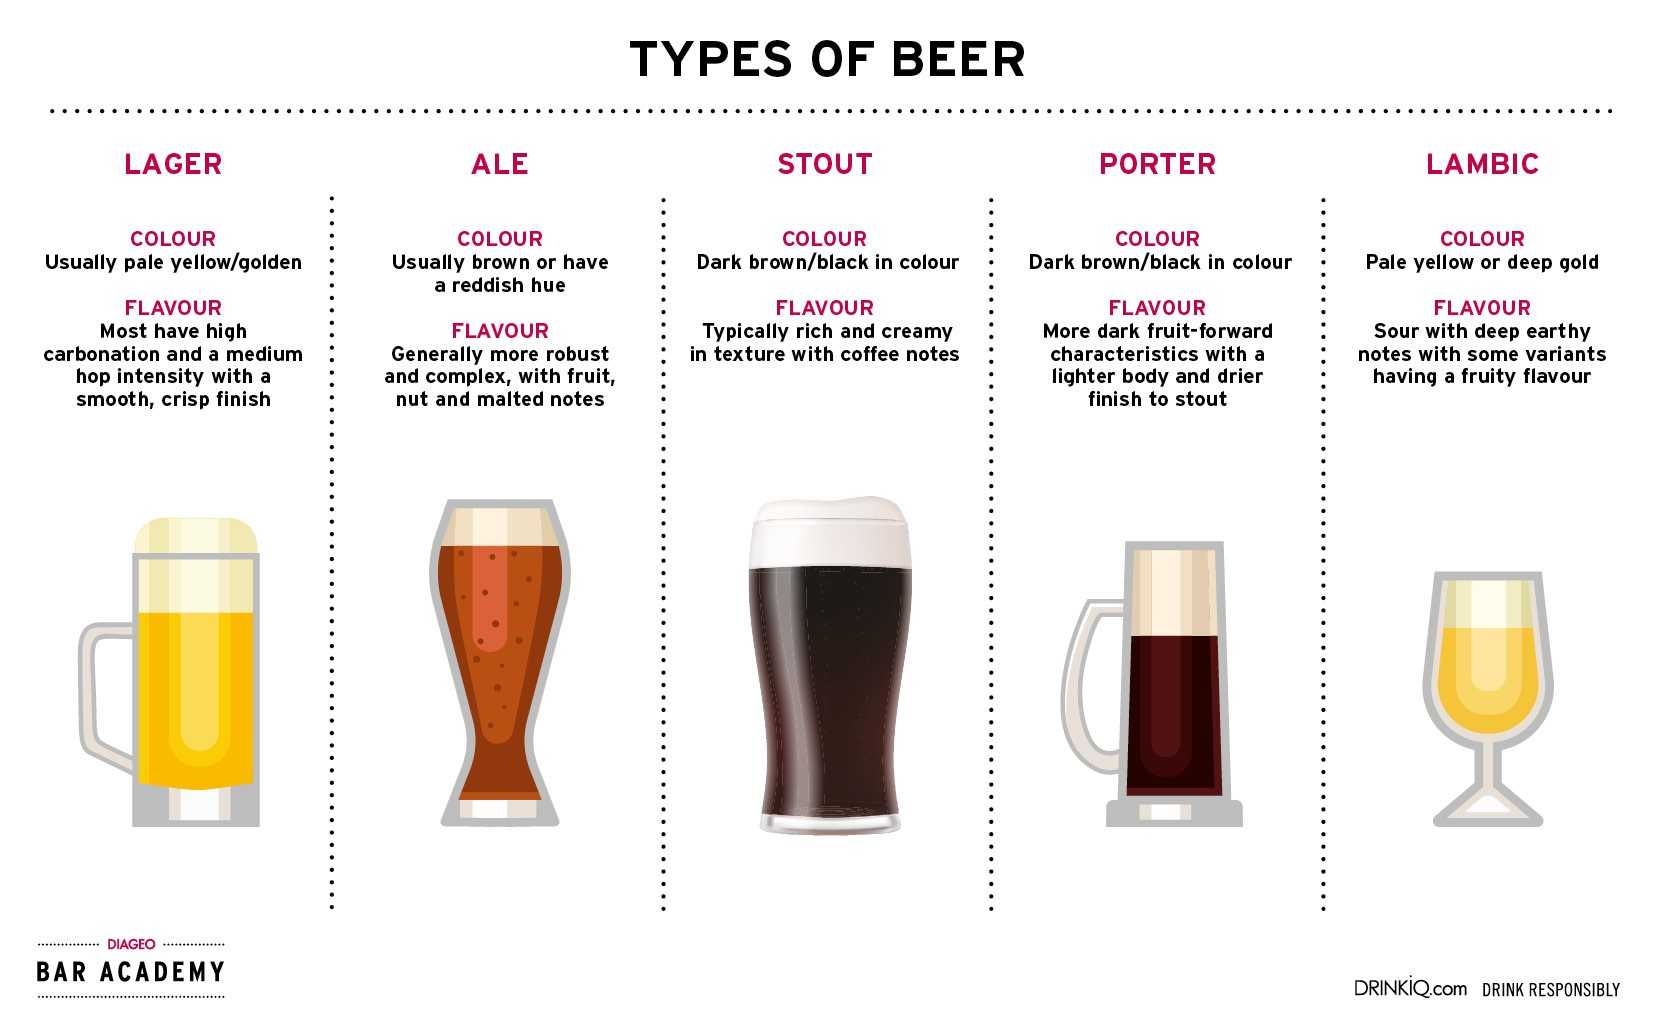 Пиво портер (porter) — обзор и особенности напитка